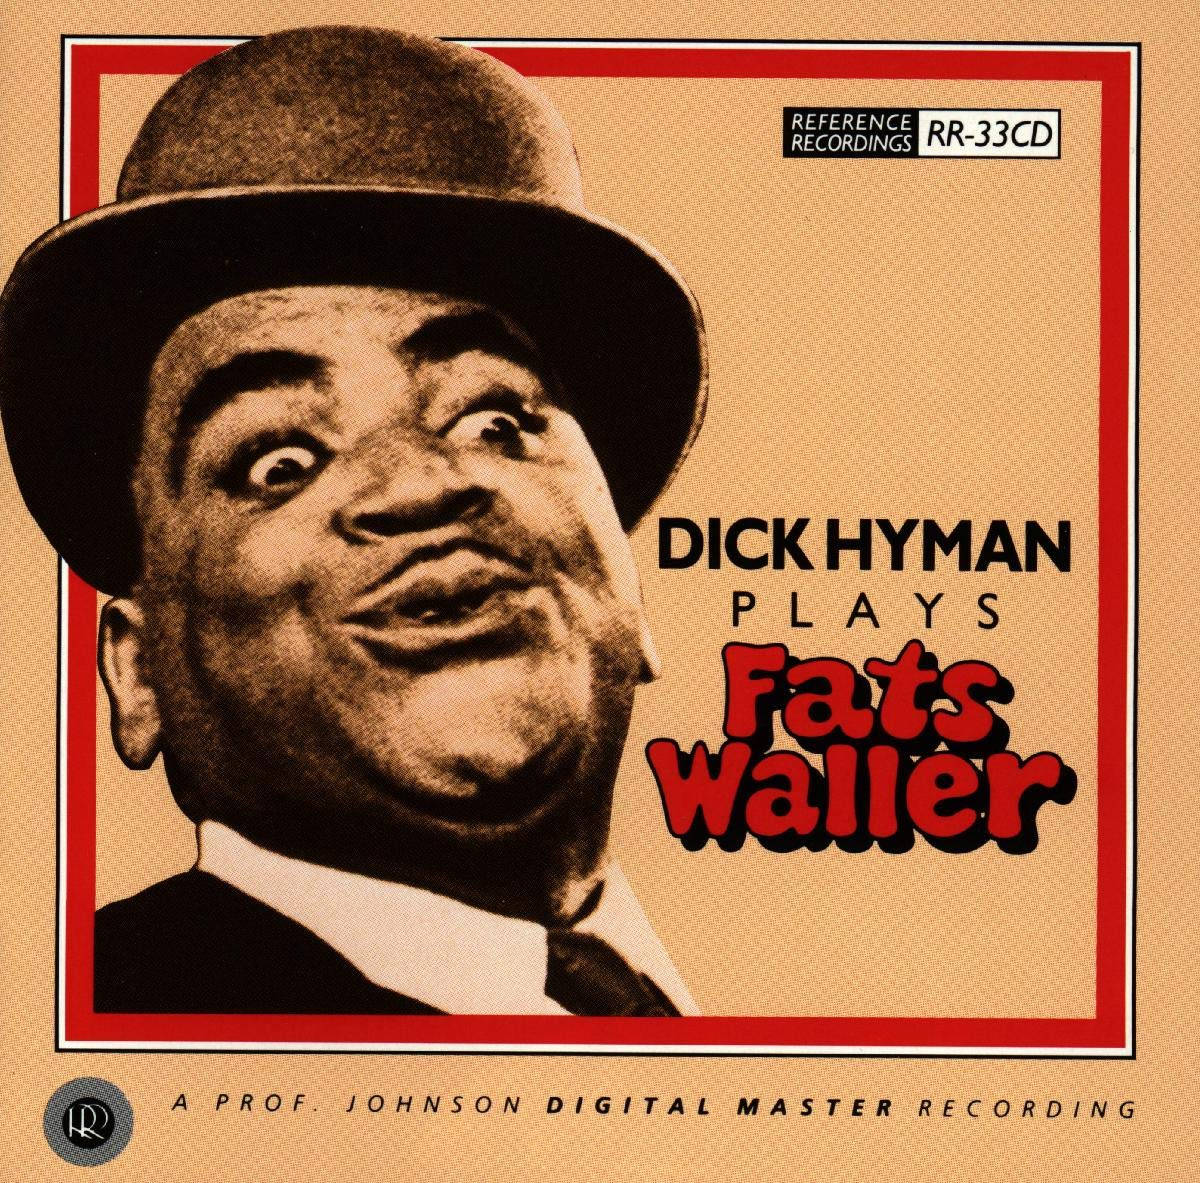 Dick Hyman Plays Fats Waller Album Cover Wallpaper